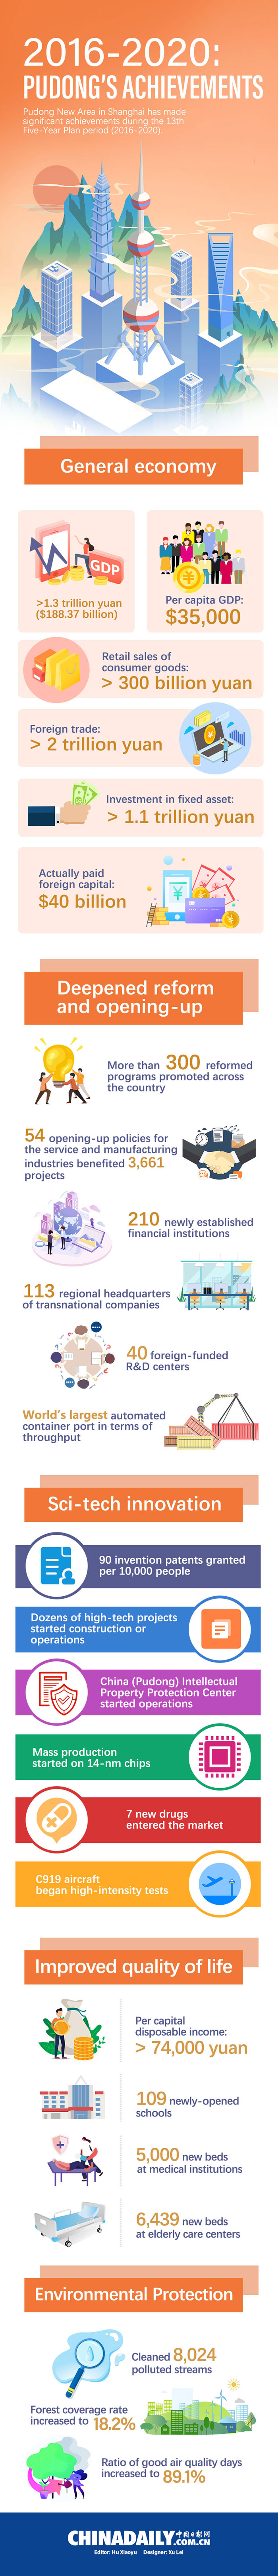 2016-2020 Pudong's achievements.jpg